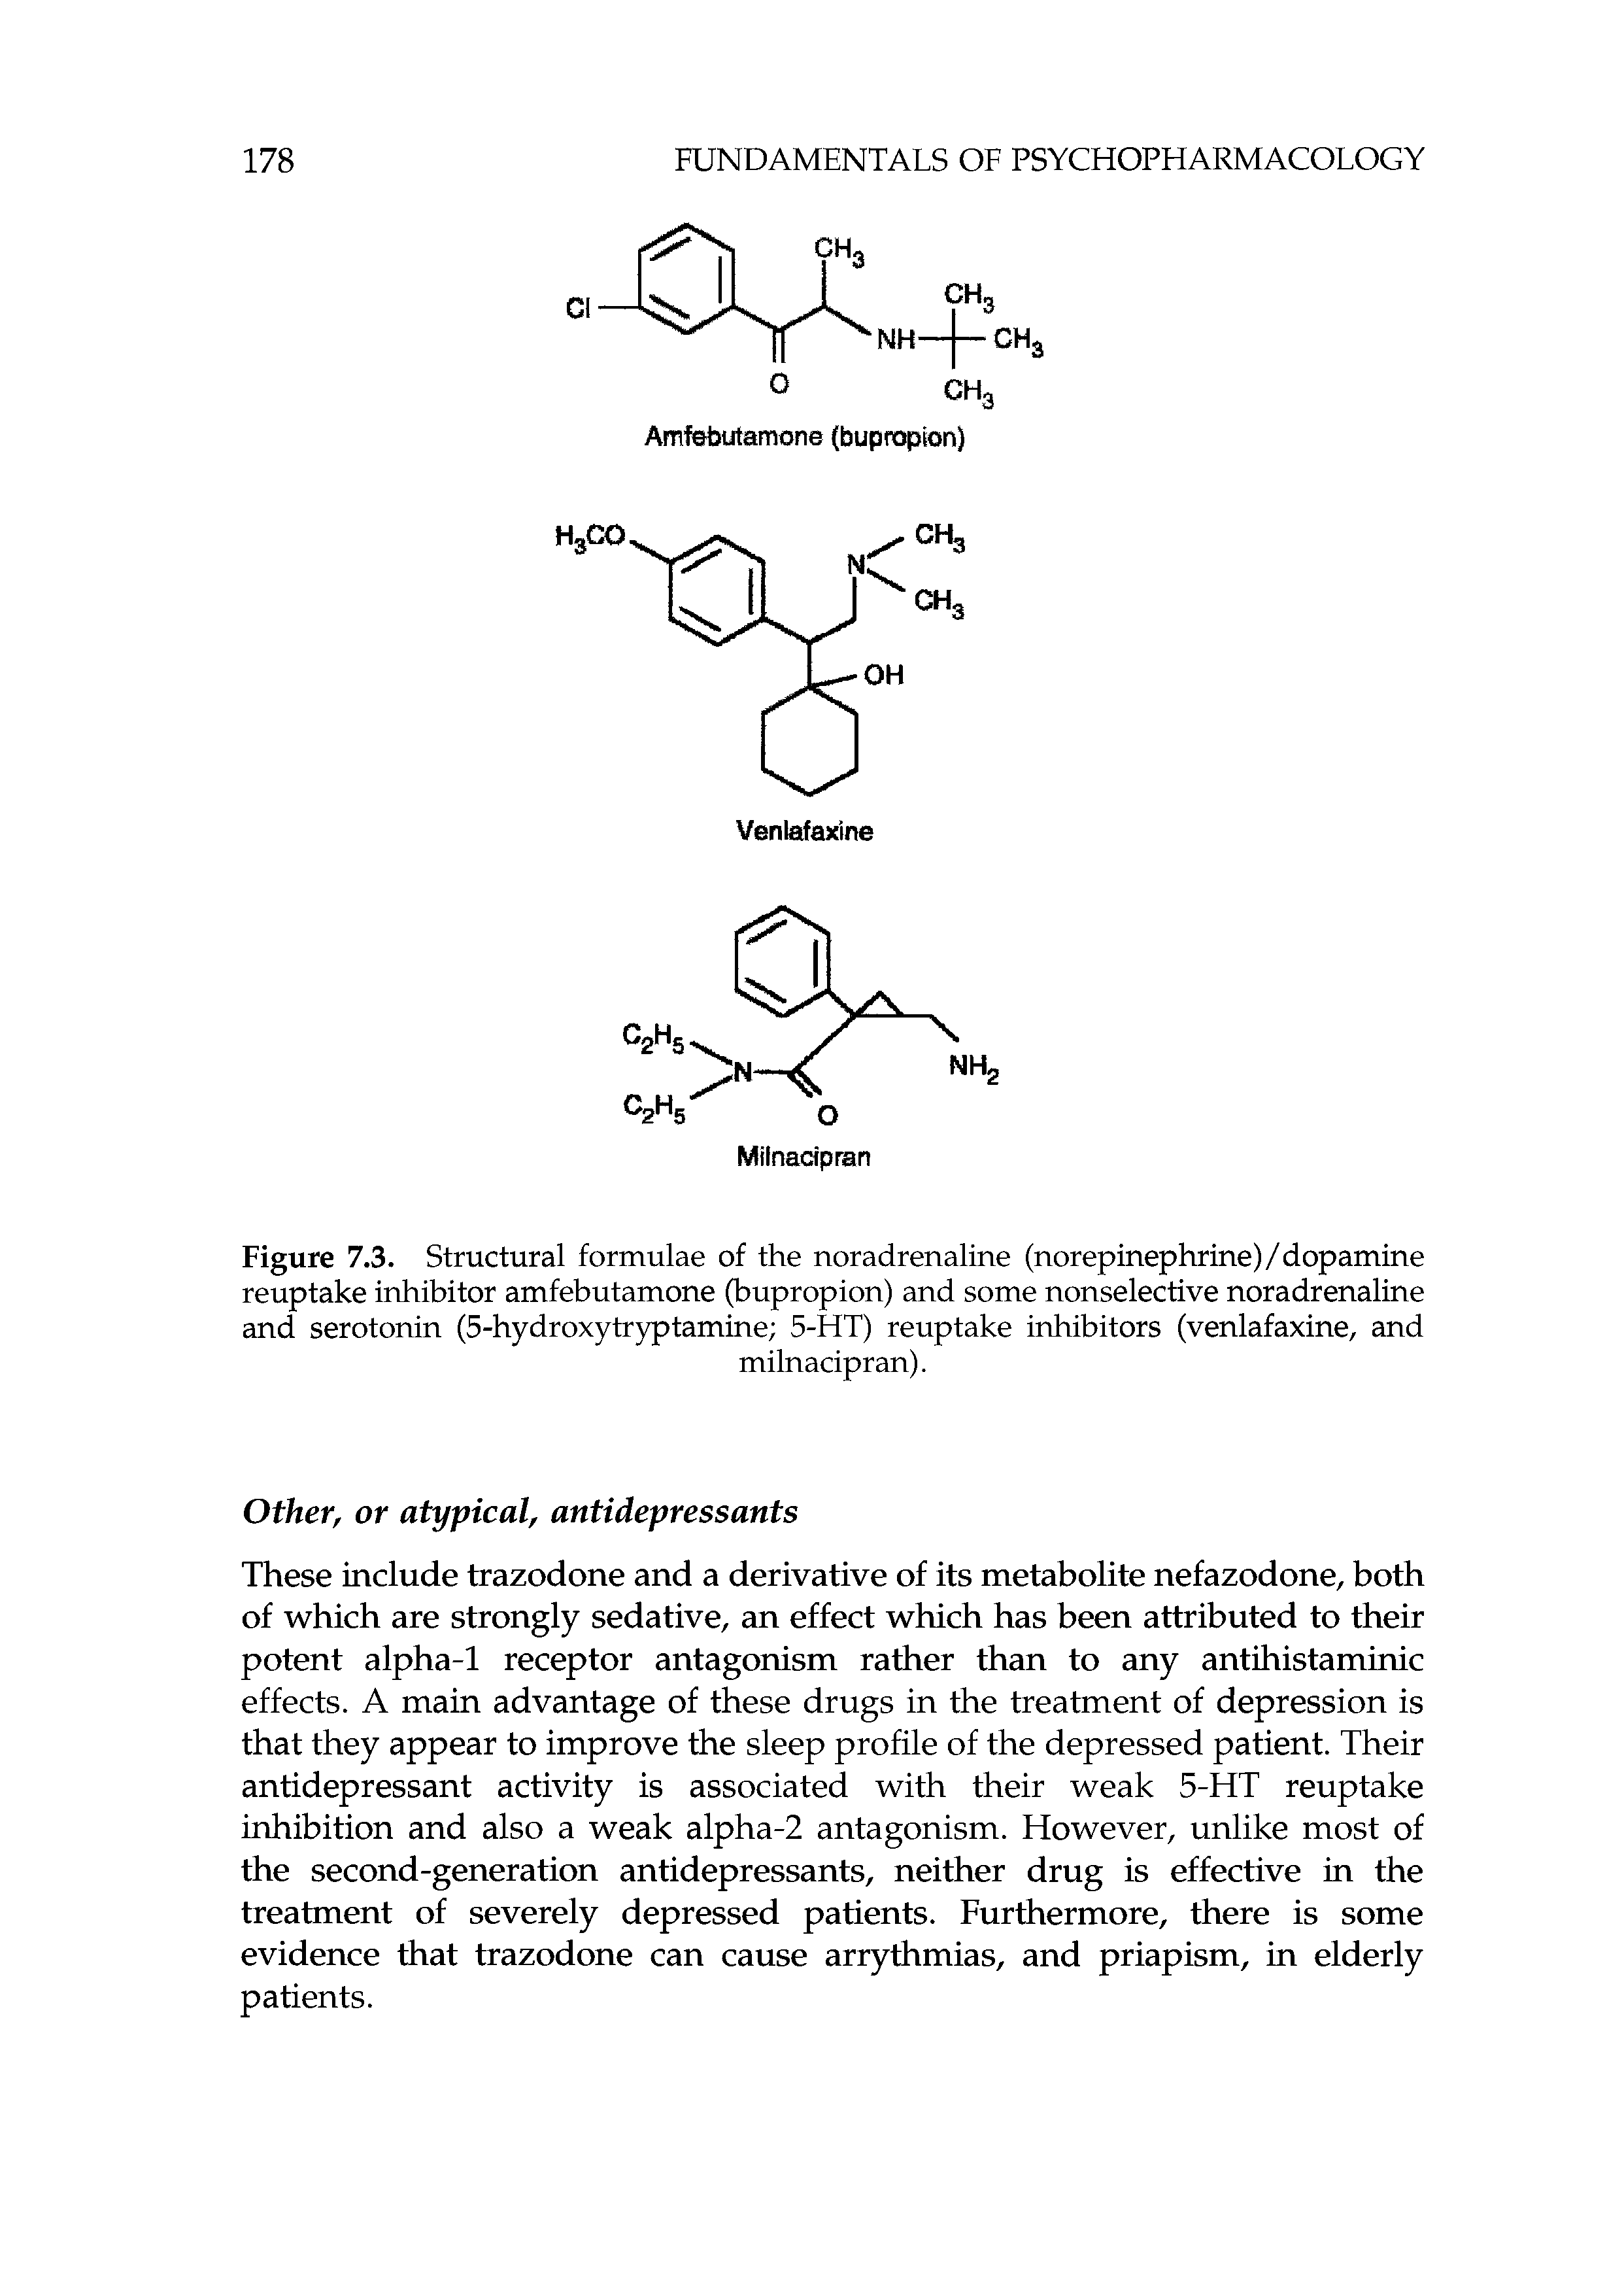 Figure 7.3. Structural formulae of the noradrenaline (norepinephrine)/dopamine reuptake inhibitor amfebutamone (bupropion) and some nonselective noradrenaline and serotonin (5-hydroxytr3 tamine 5-HT) reuptake inhibitors (venlafaxine, and...